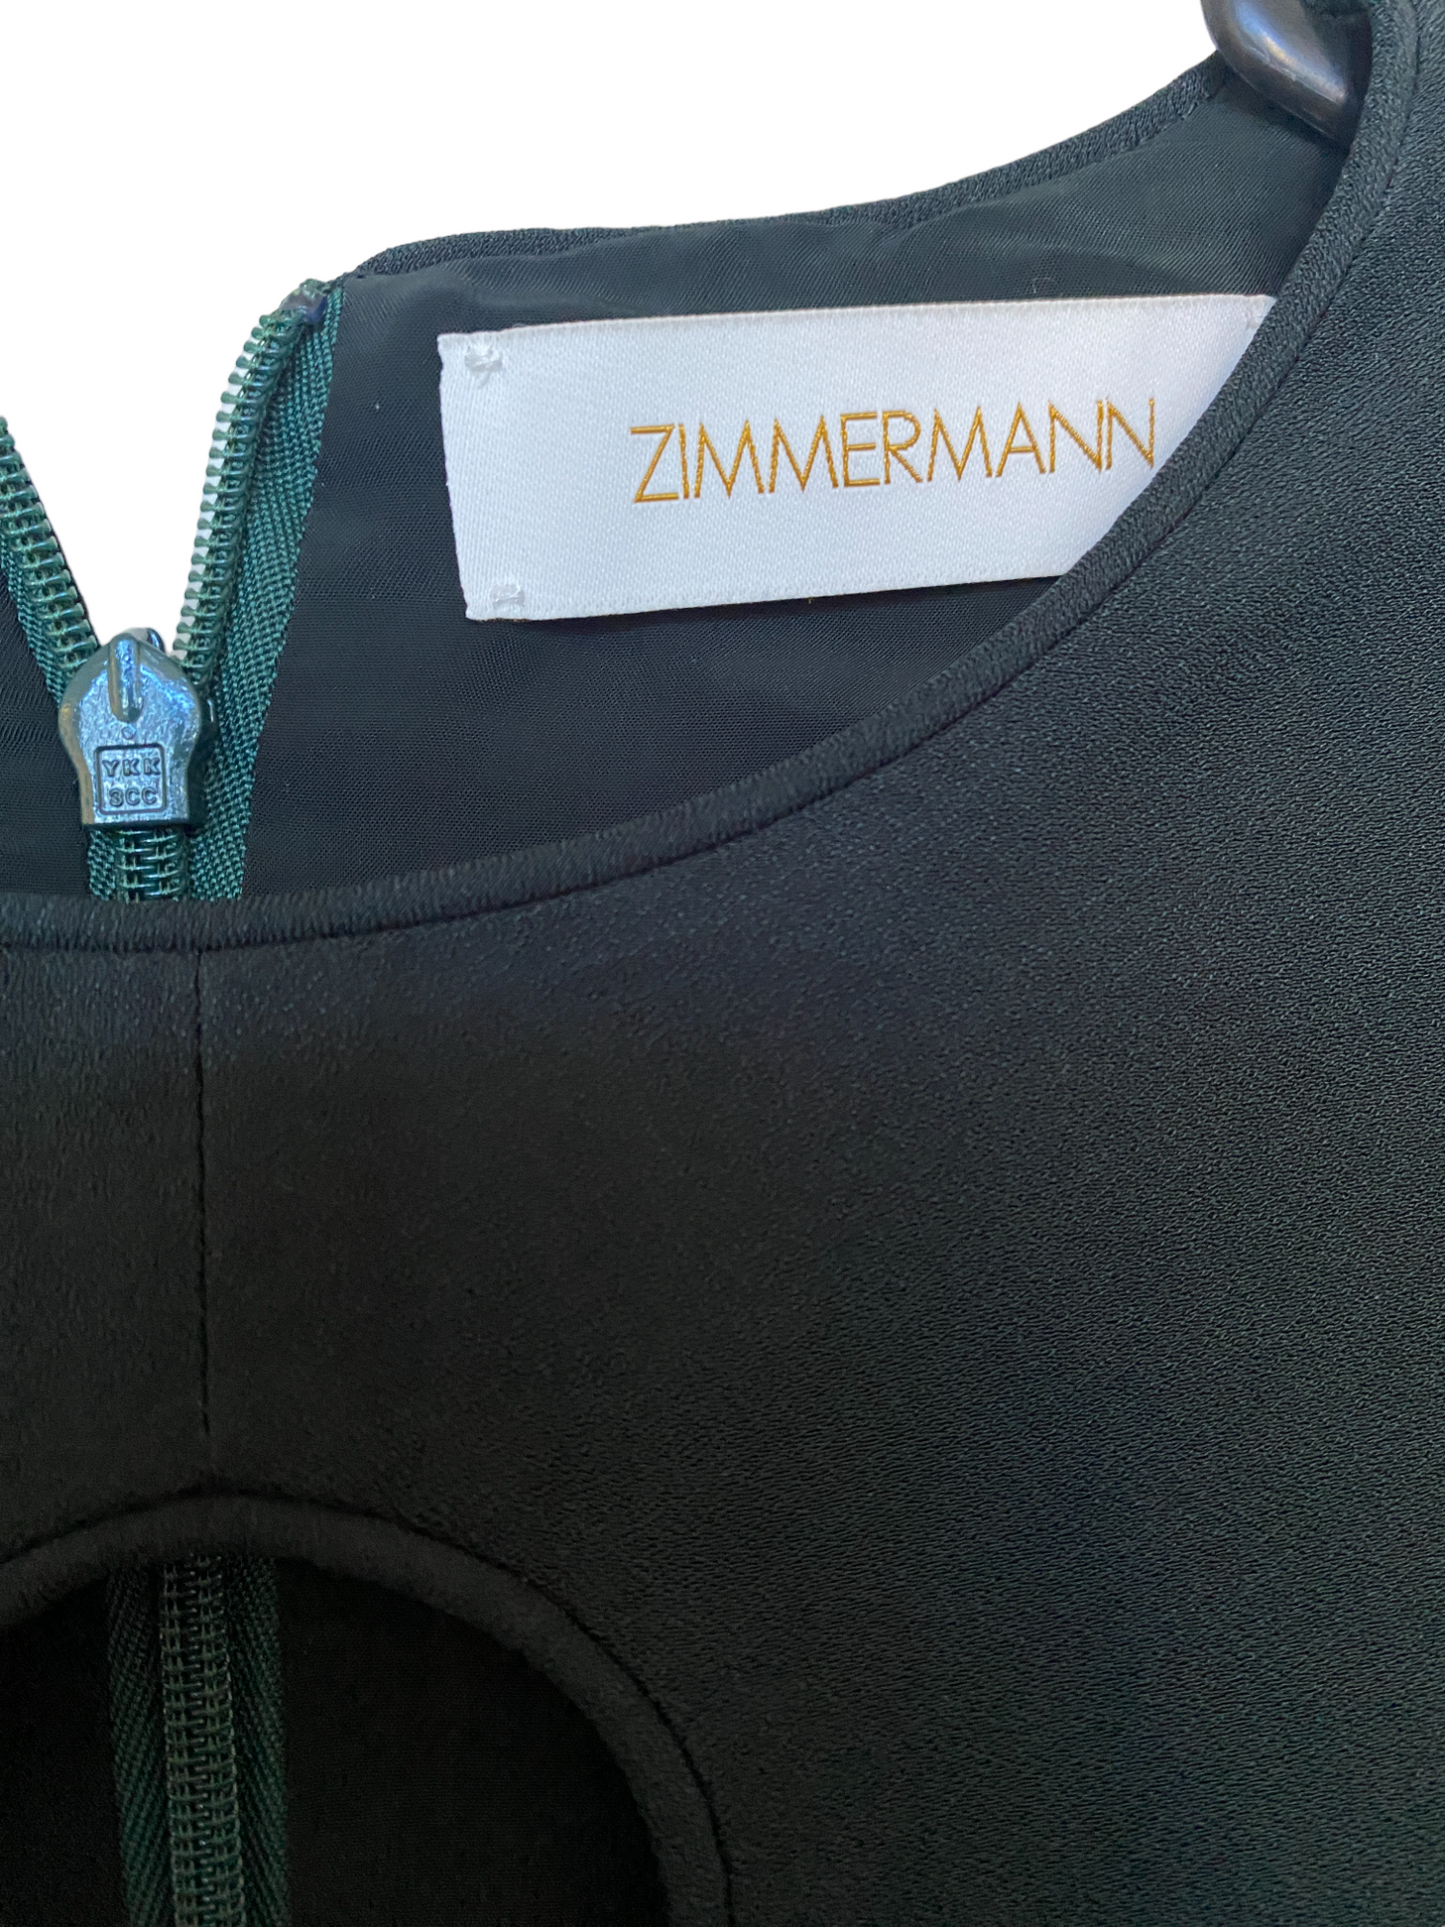 Zimmermann Keyhole Midi Dress, Green |Viscose, Puff Sleeves, Cutout, Fit & Flare